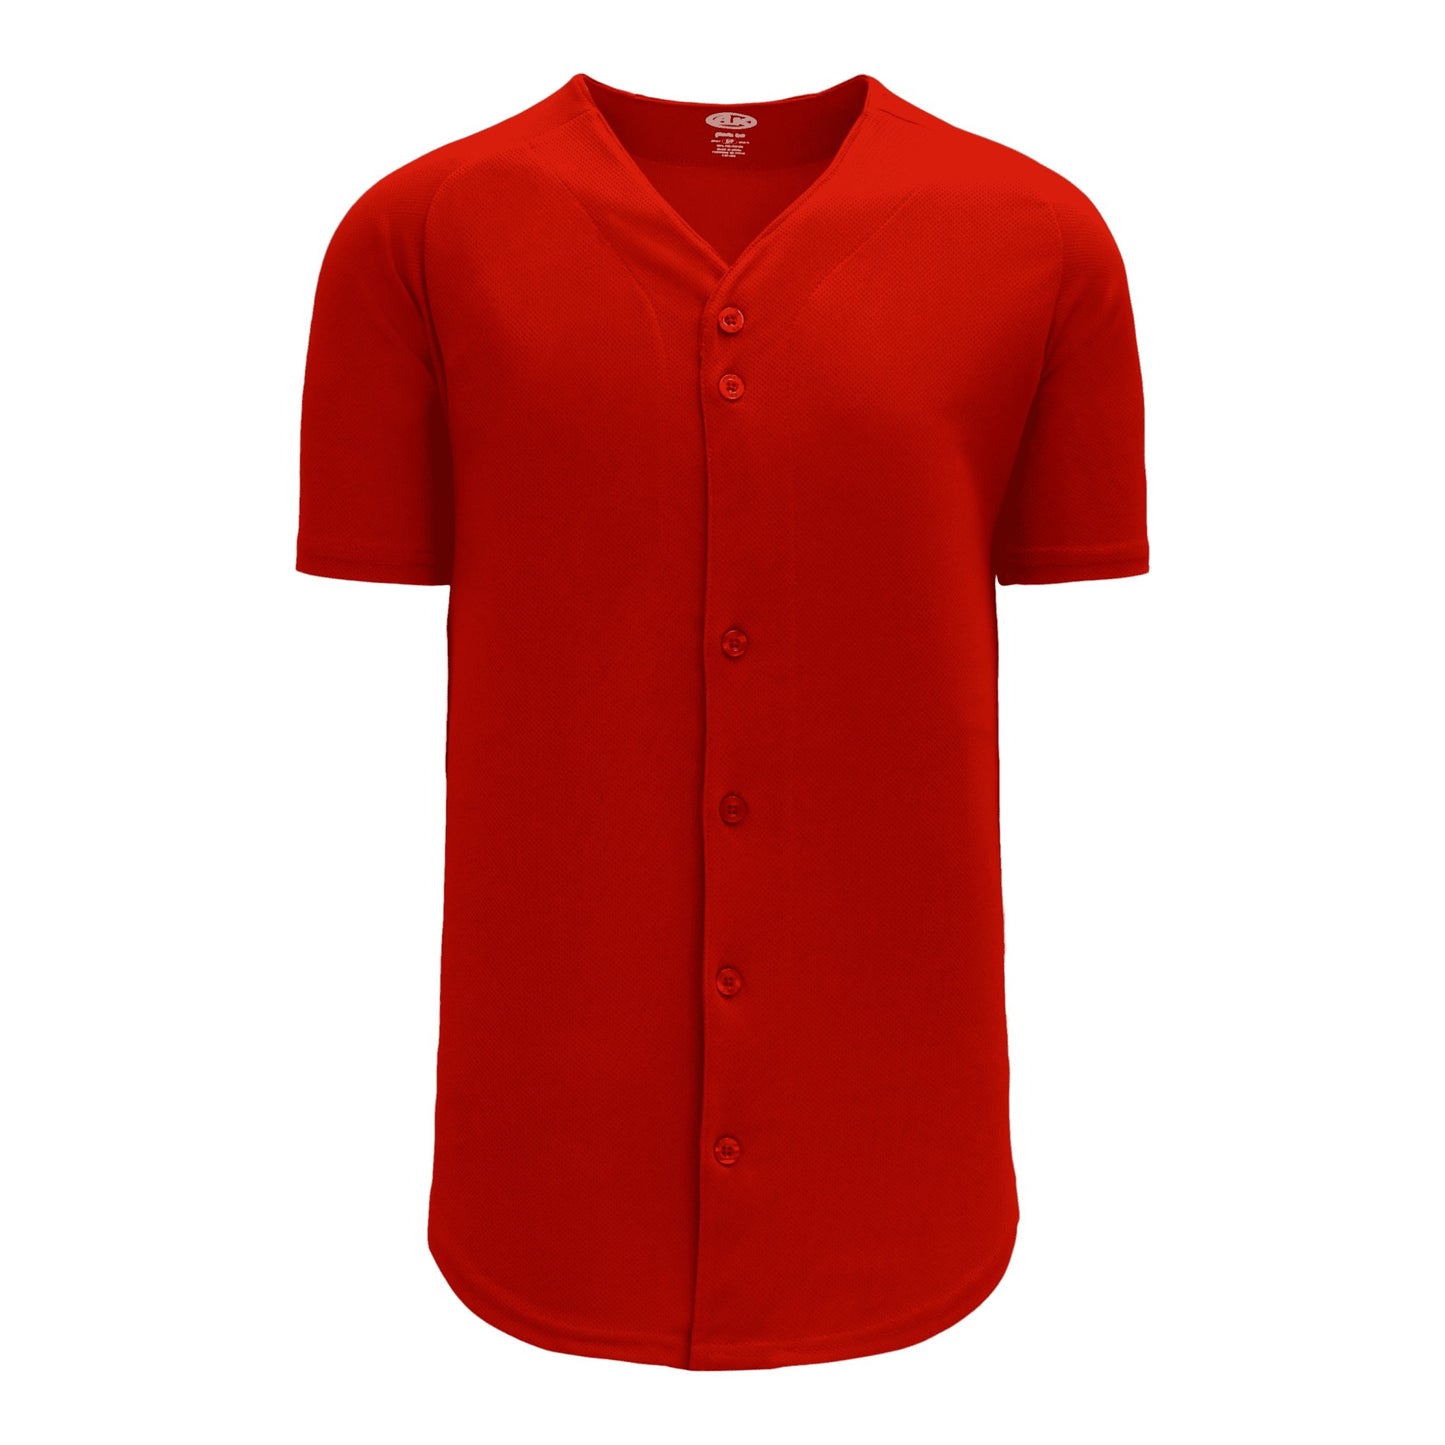 Full Button Baseball Jerseys: Solid Colours, Women's Cut